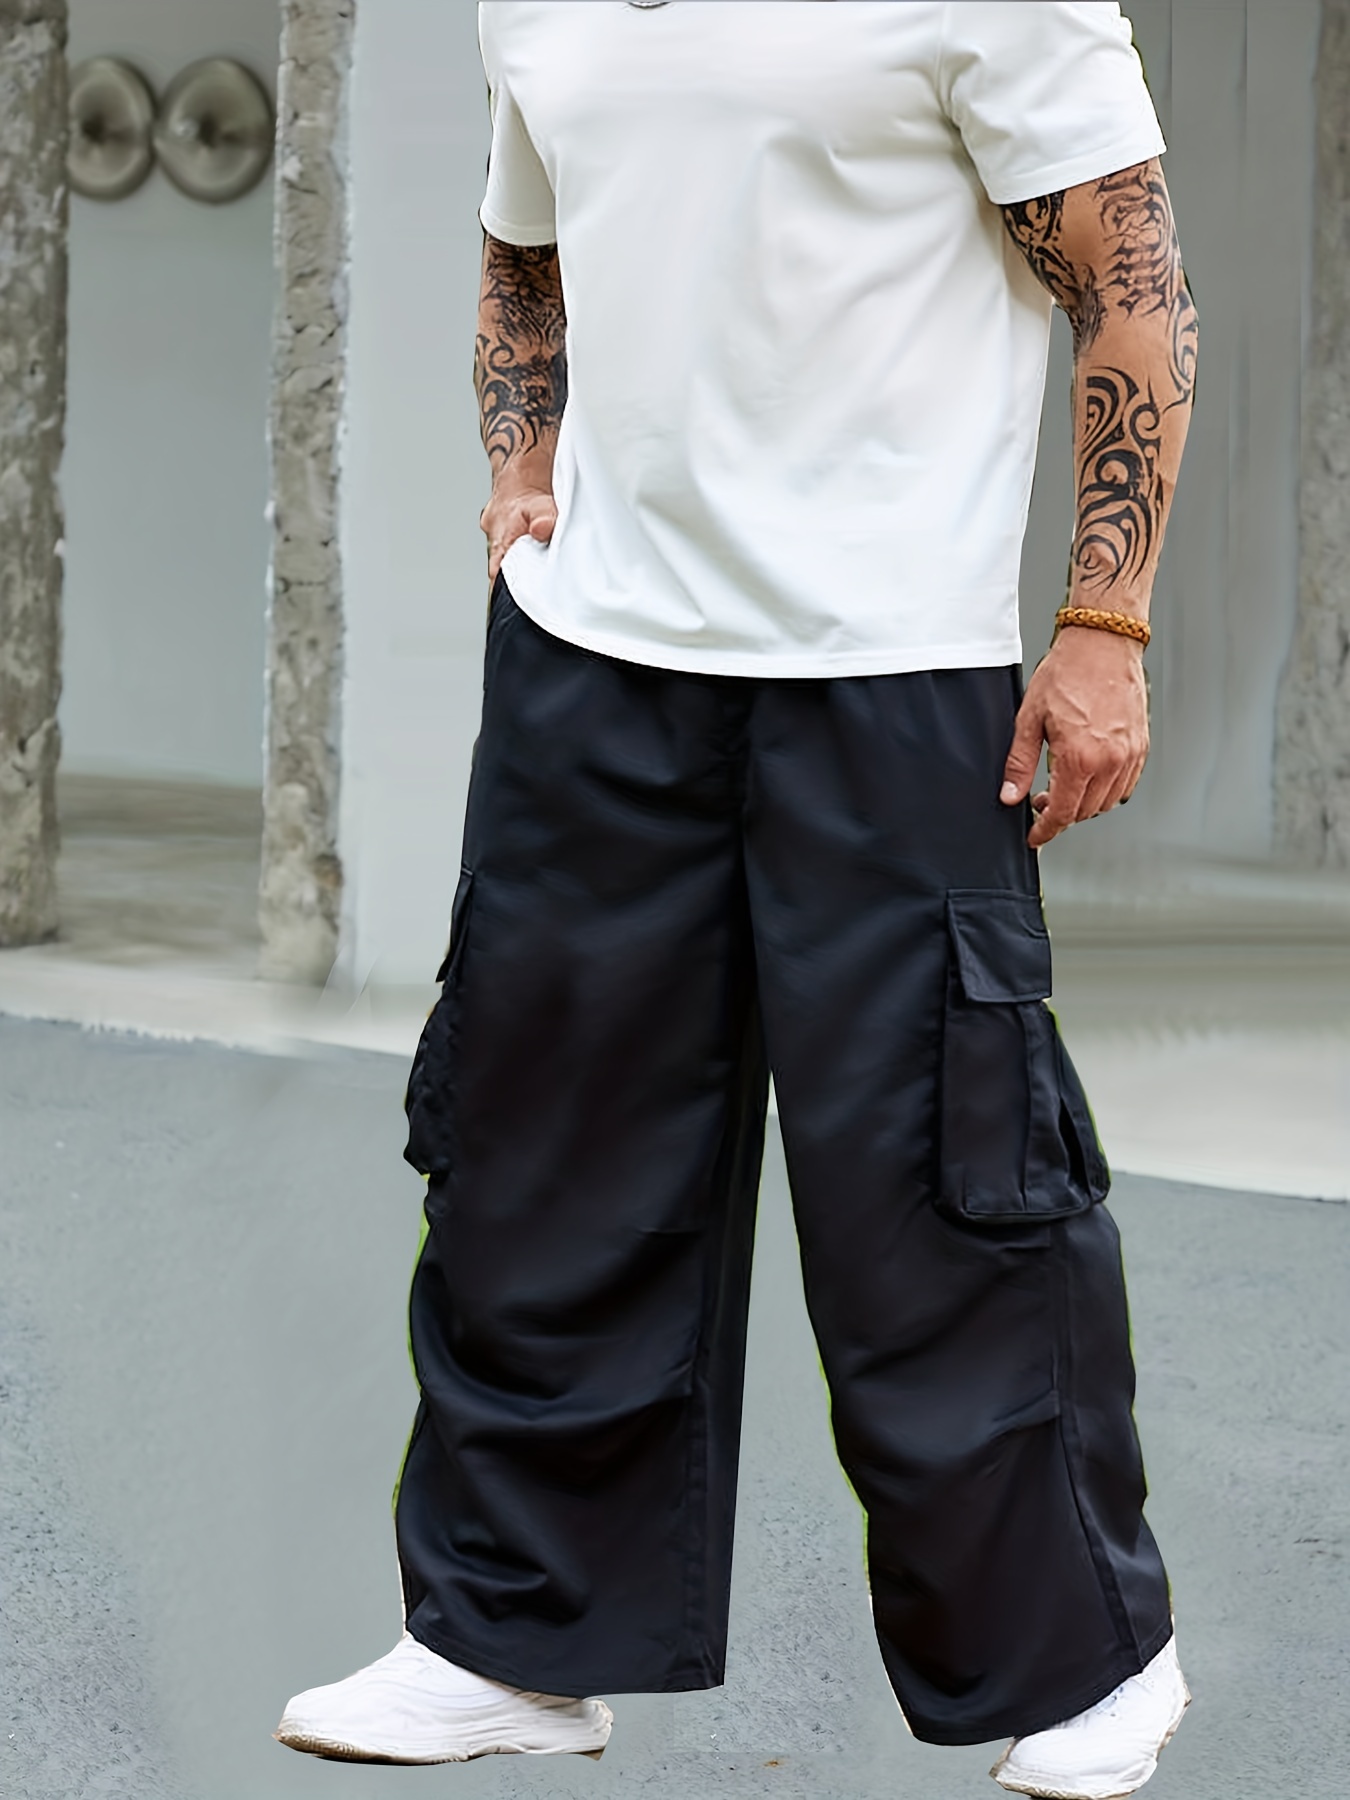  NP - Pantalones anchos para hombre, talla grande, ropa